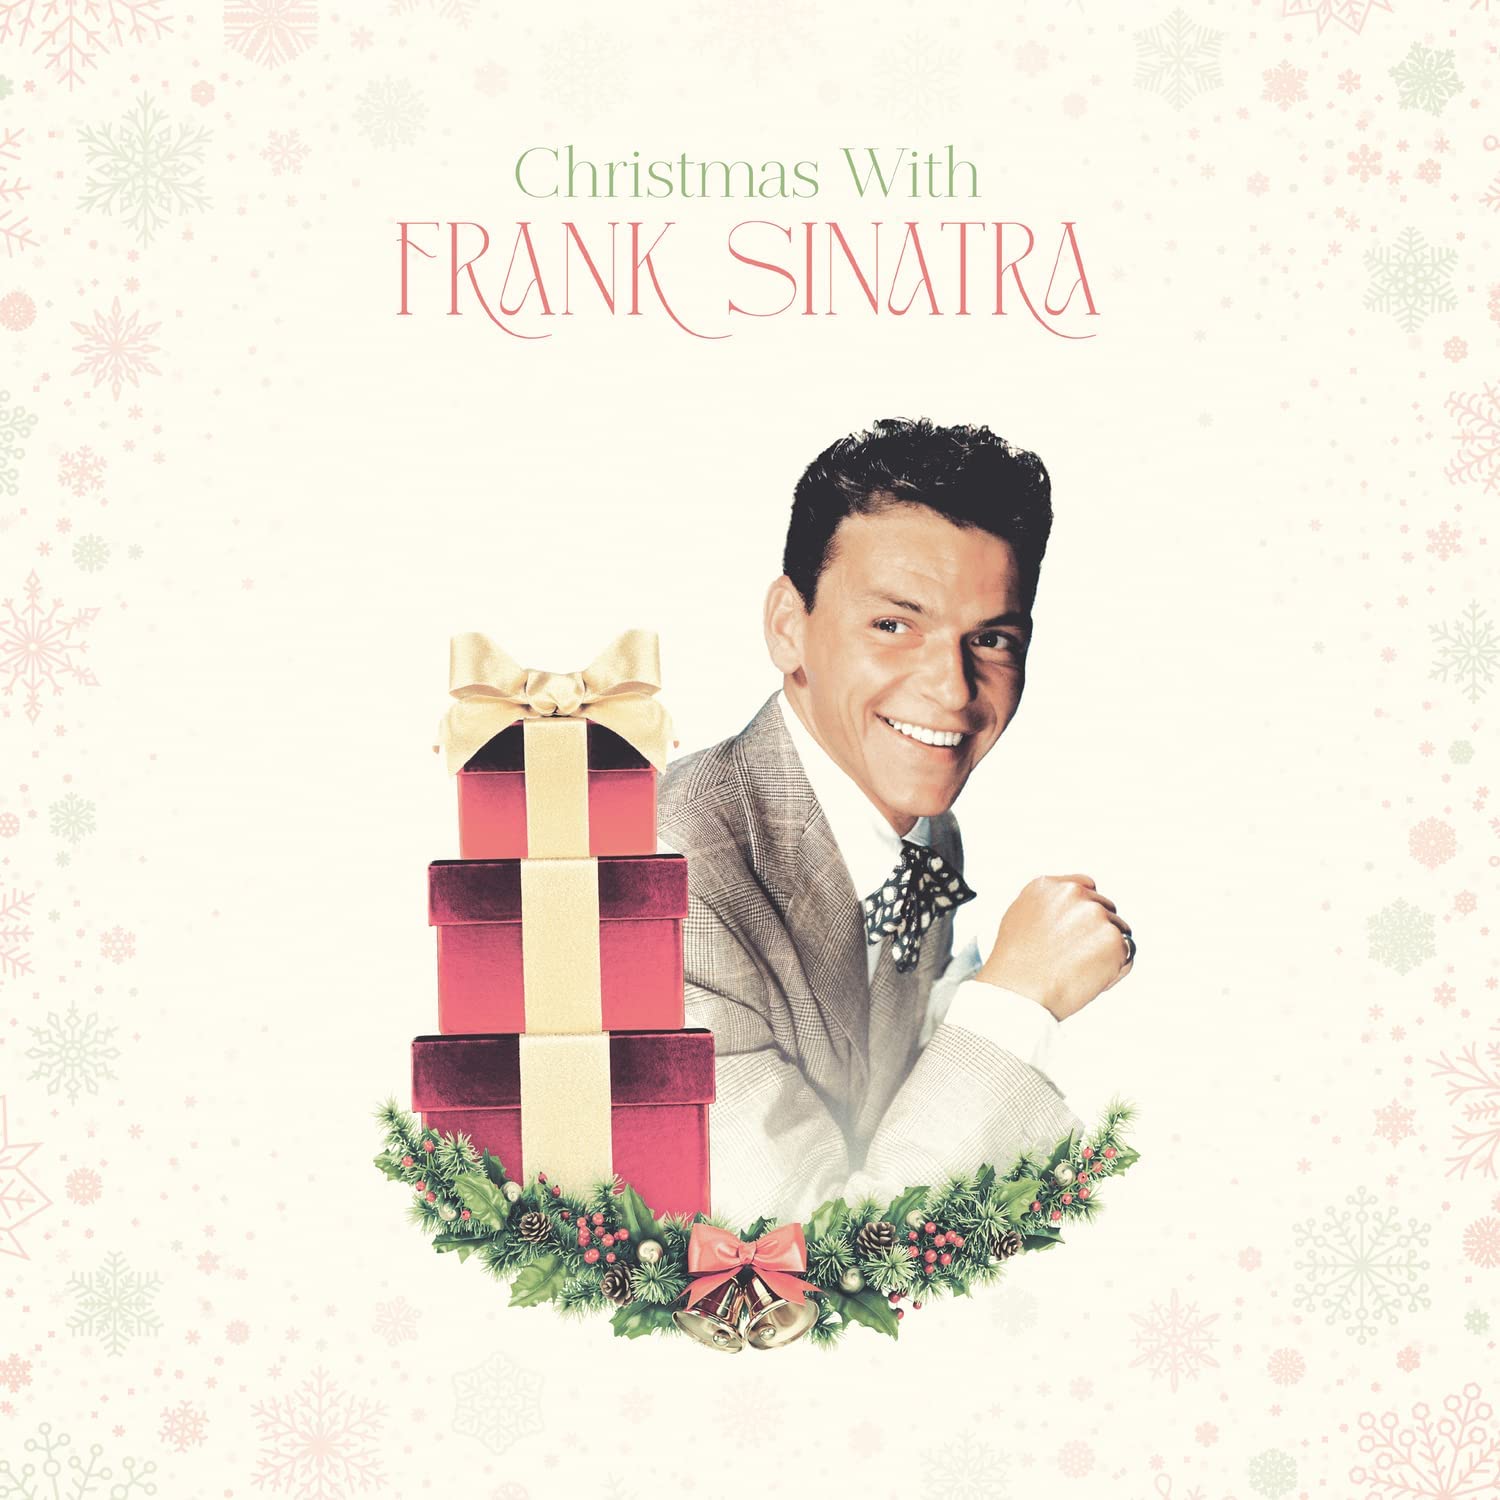 Frank Sinatra Christmas With Vinyl LP